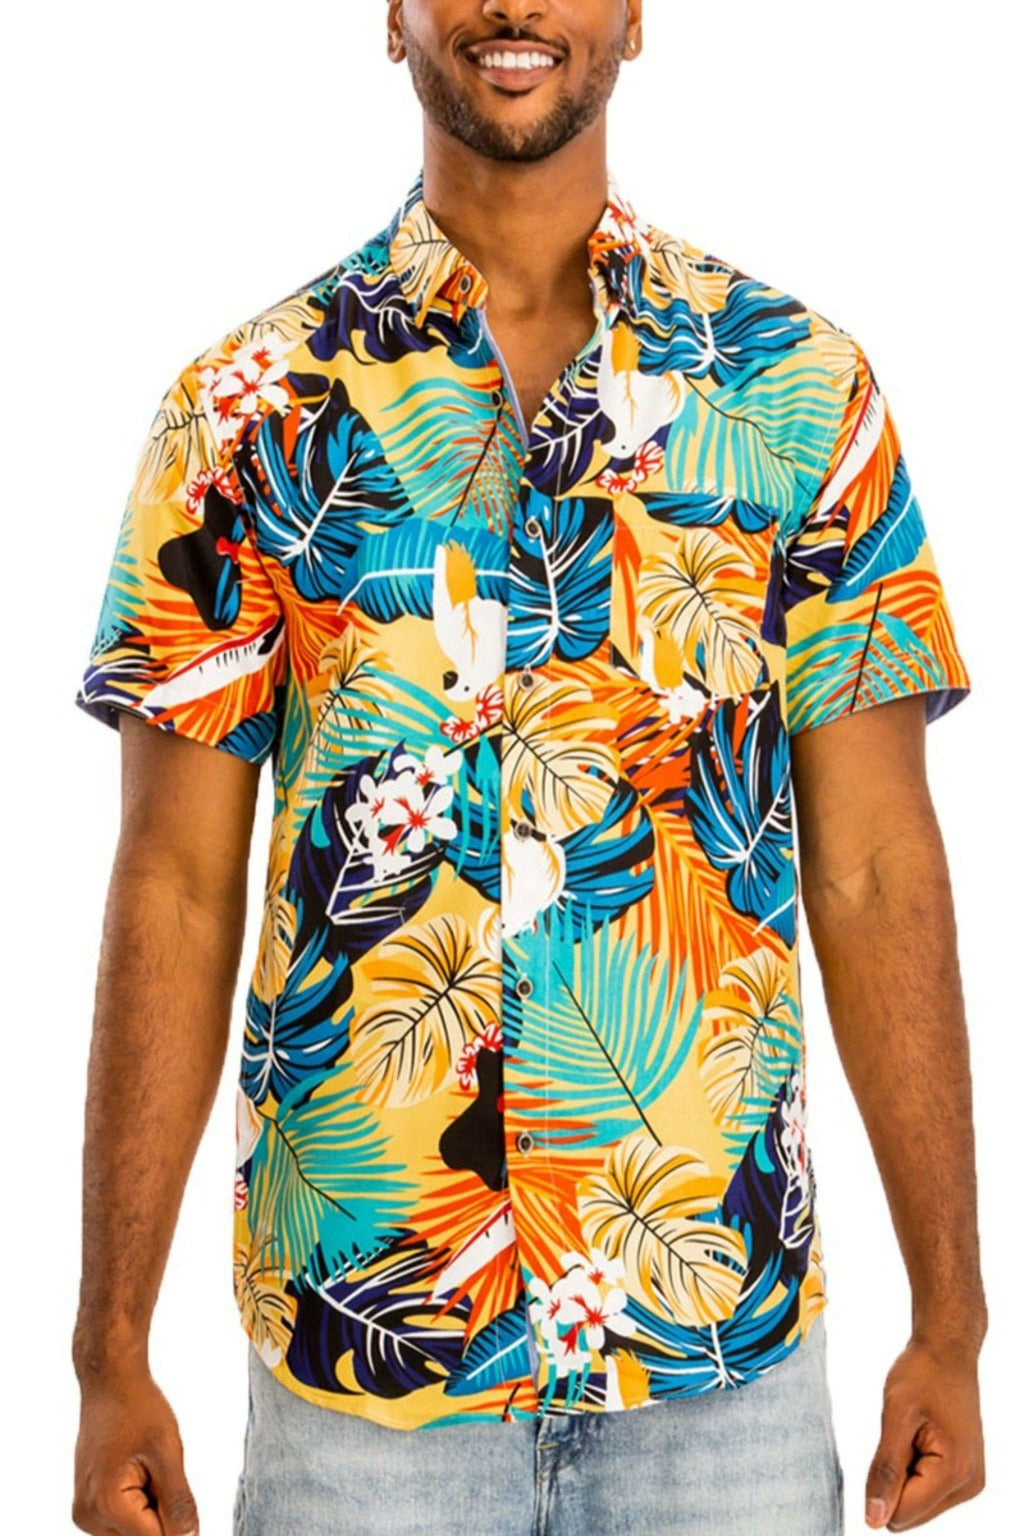 Epicplacess shirts Weiv Hawaiian Print Button Down Shirts